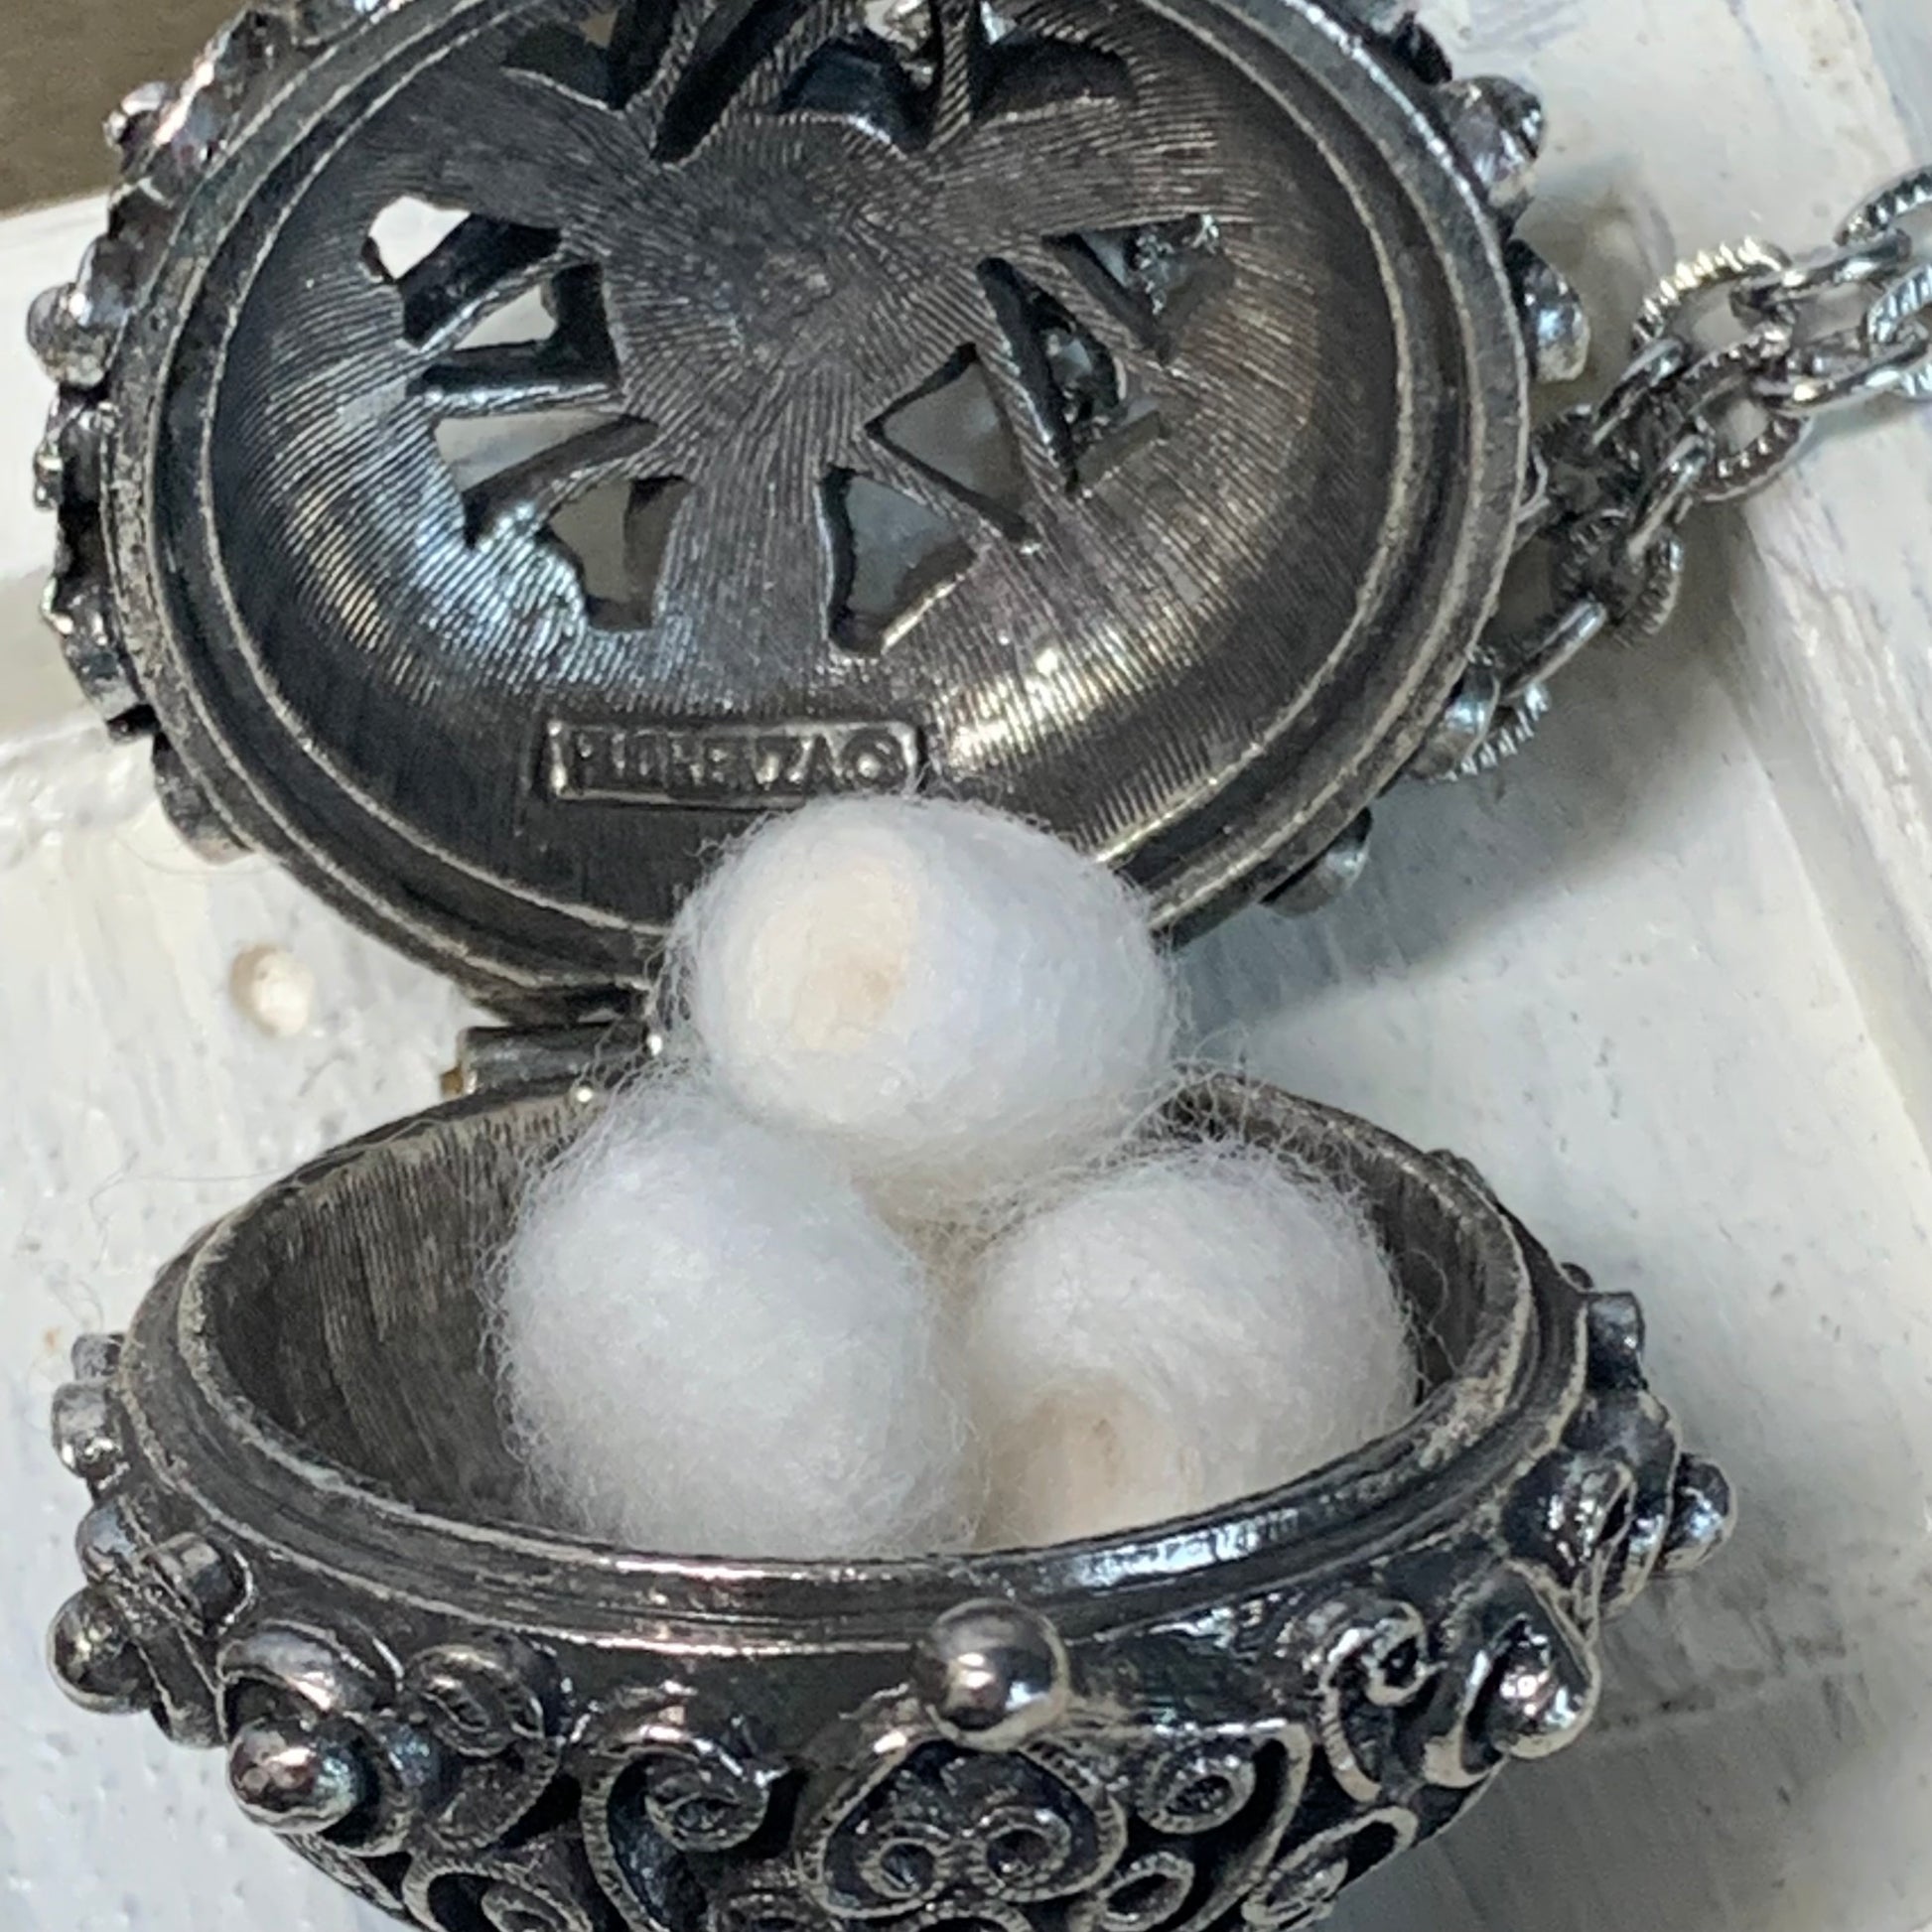 mini cotton balls inside